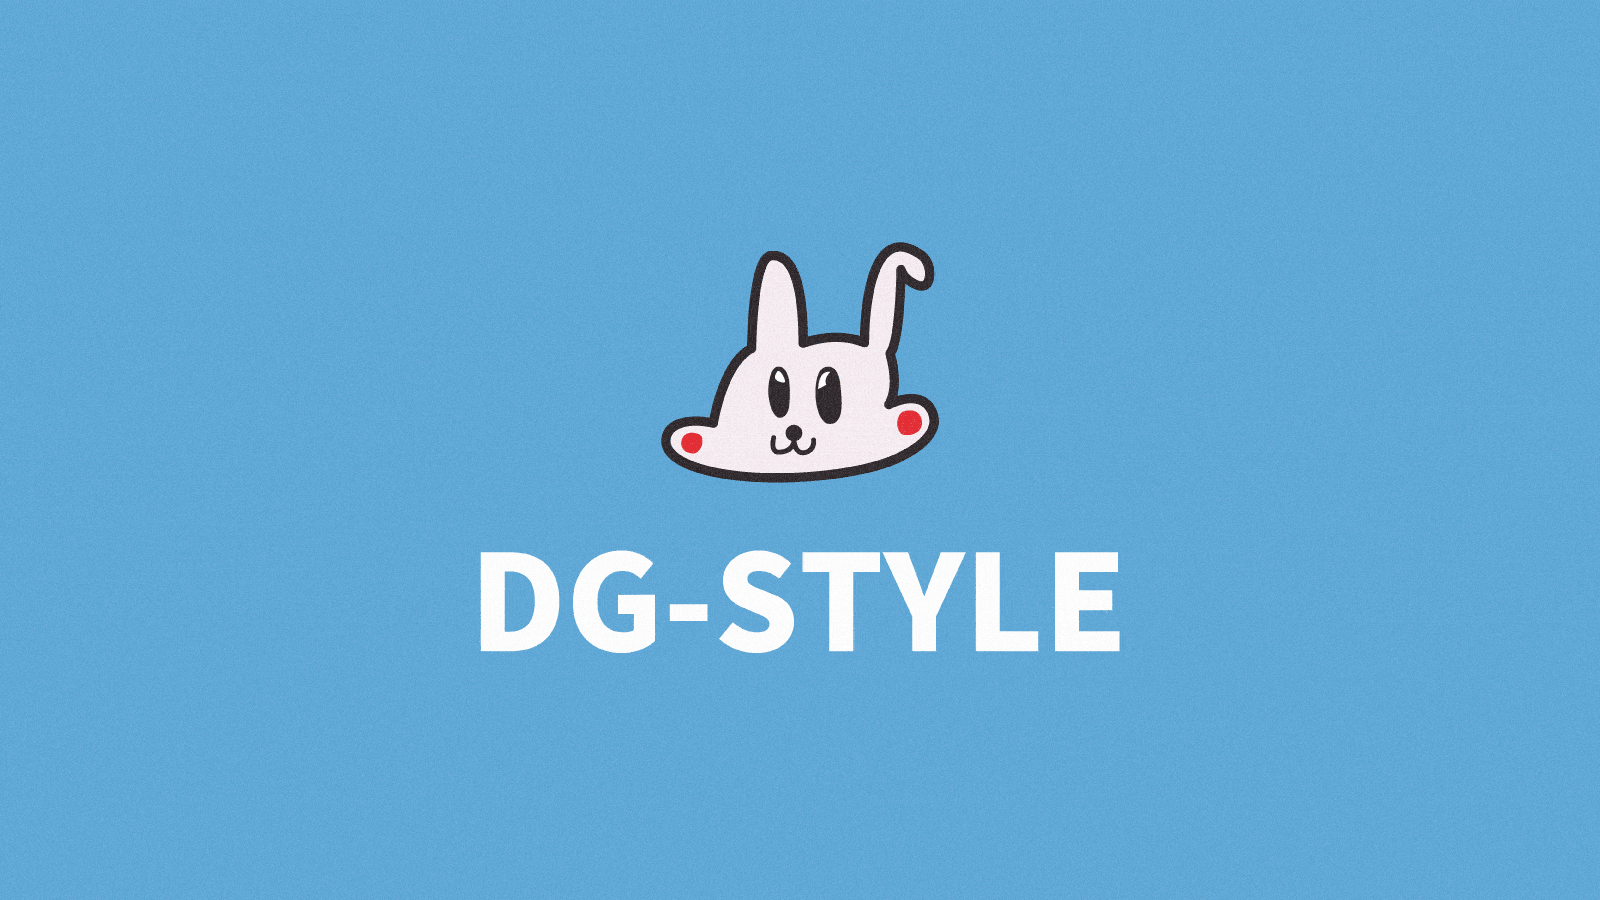 DG-STYLE Ver 5.0.2~3 アップデート